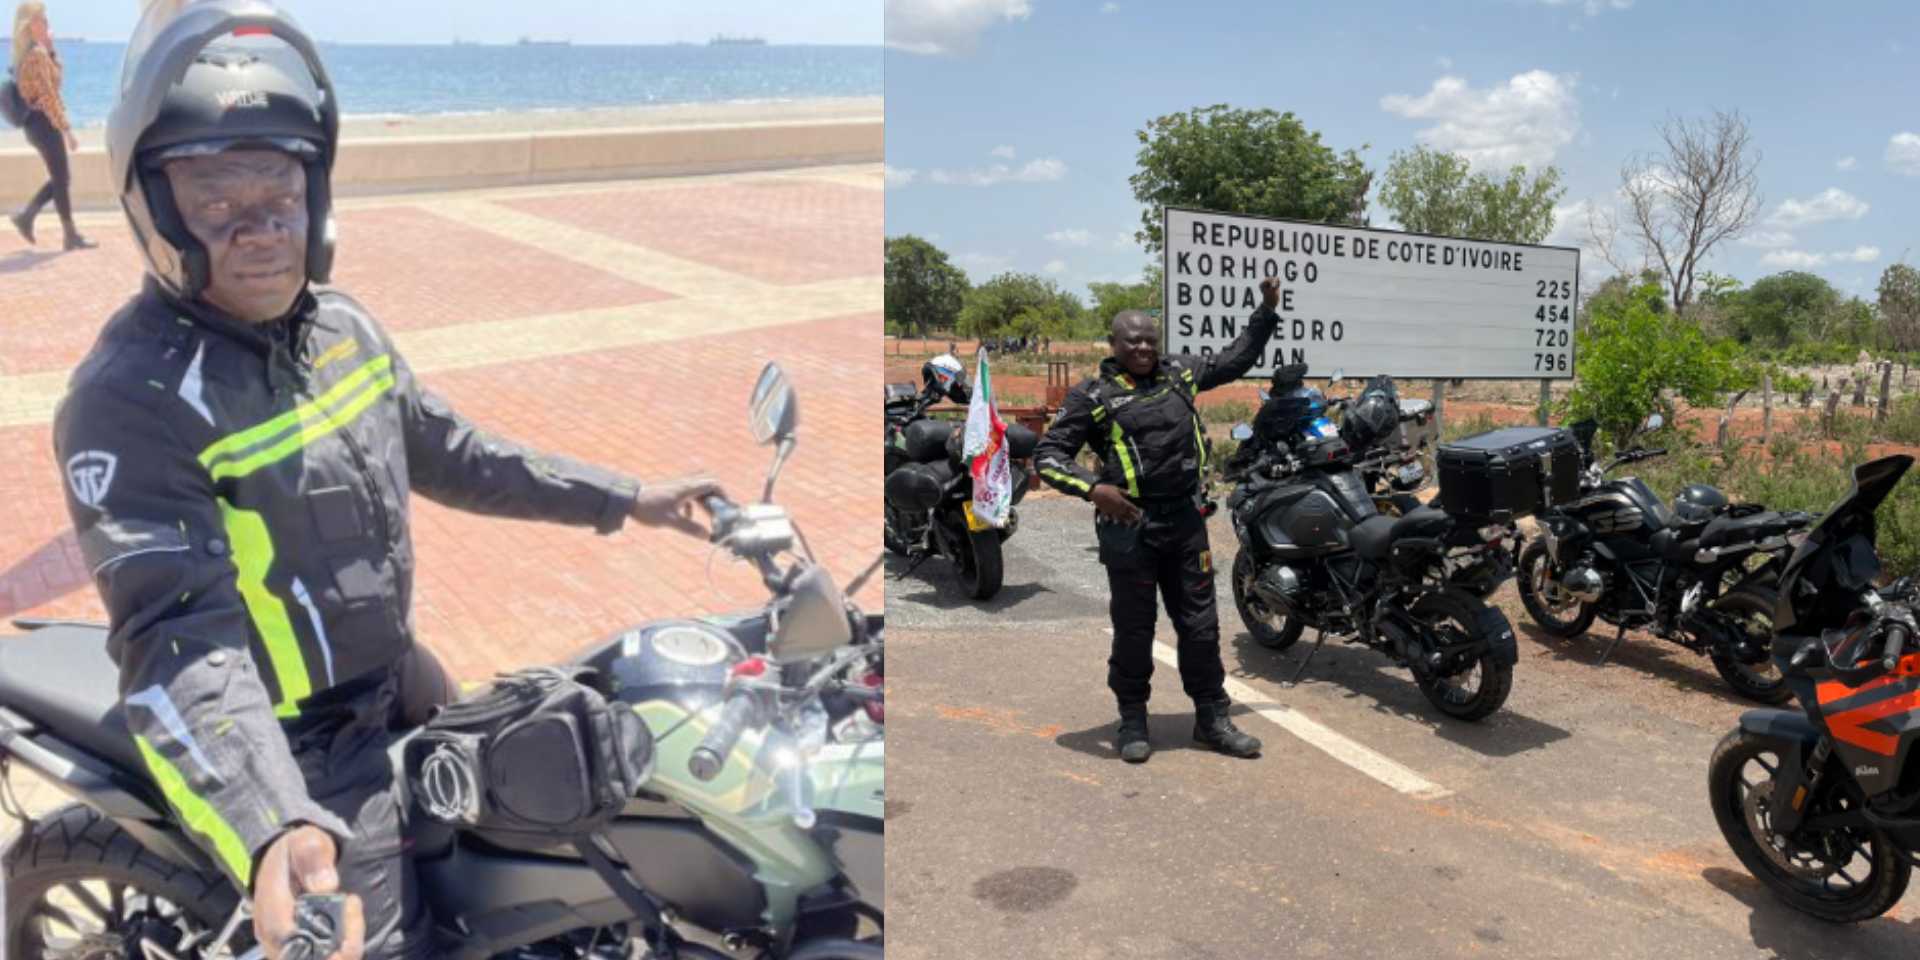 Nigerian biker denied entry into Cote d’Ivoire; makes U-turn